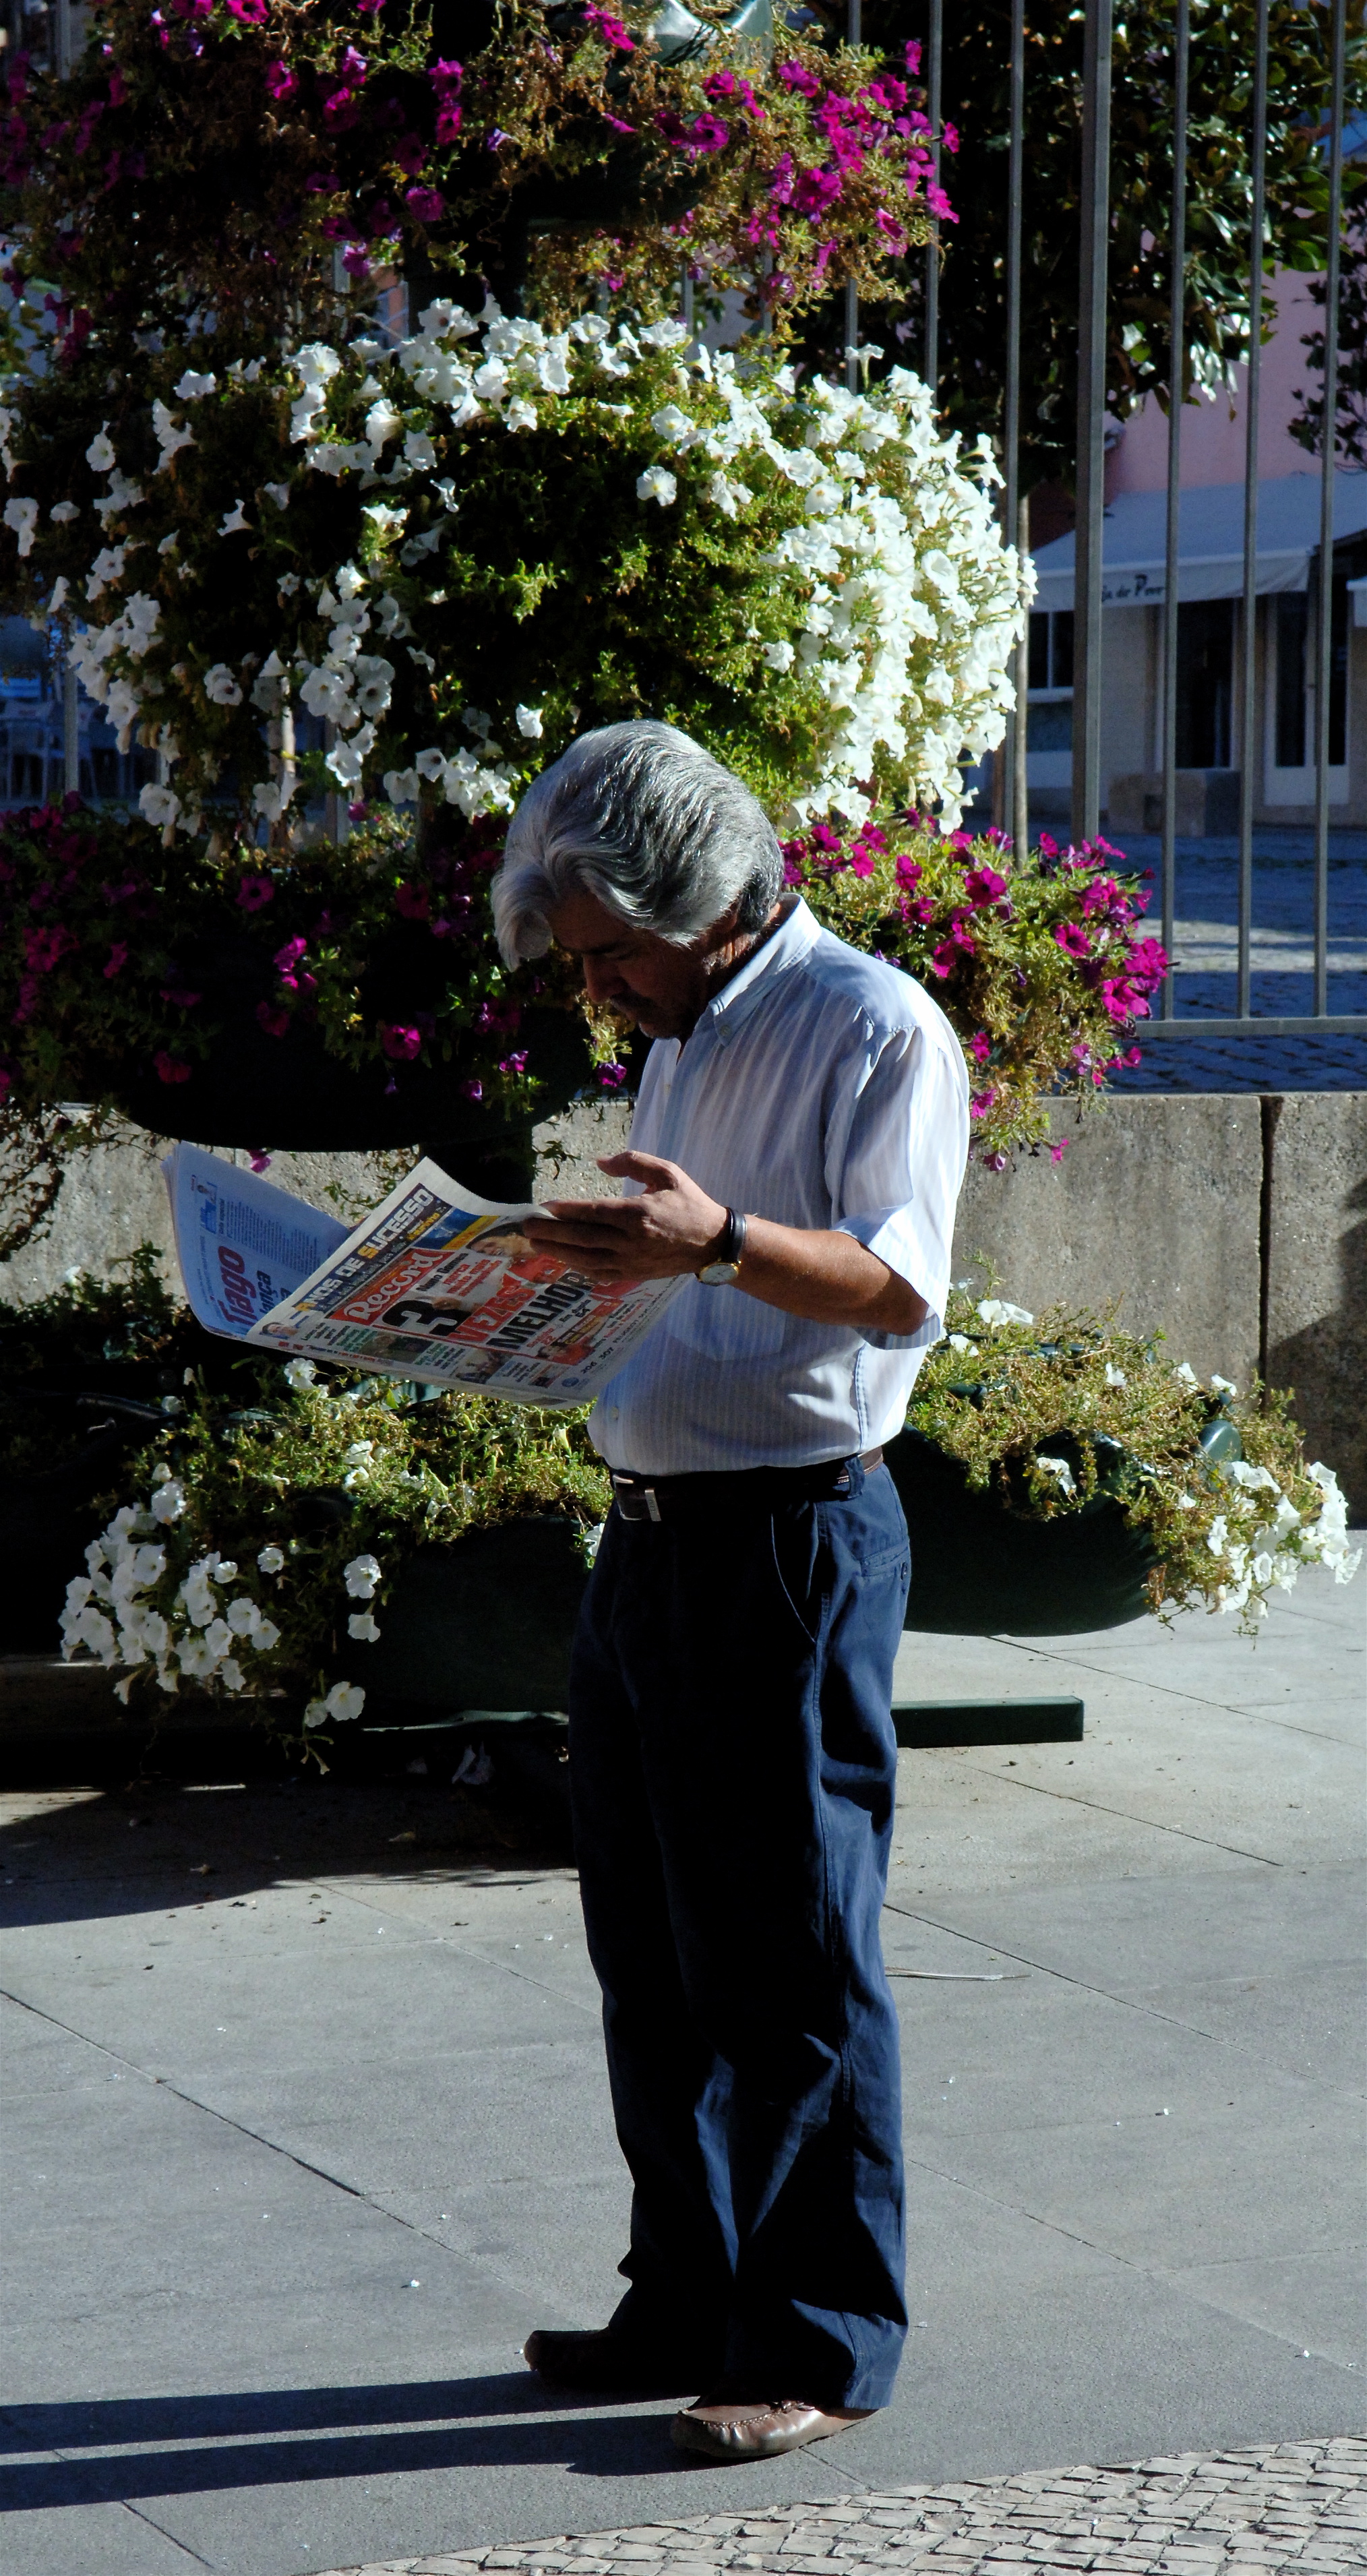 2005 reading newspaper Portugal 69716477